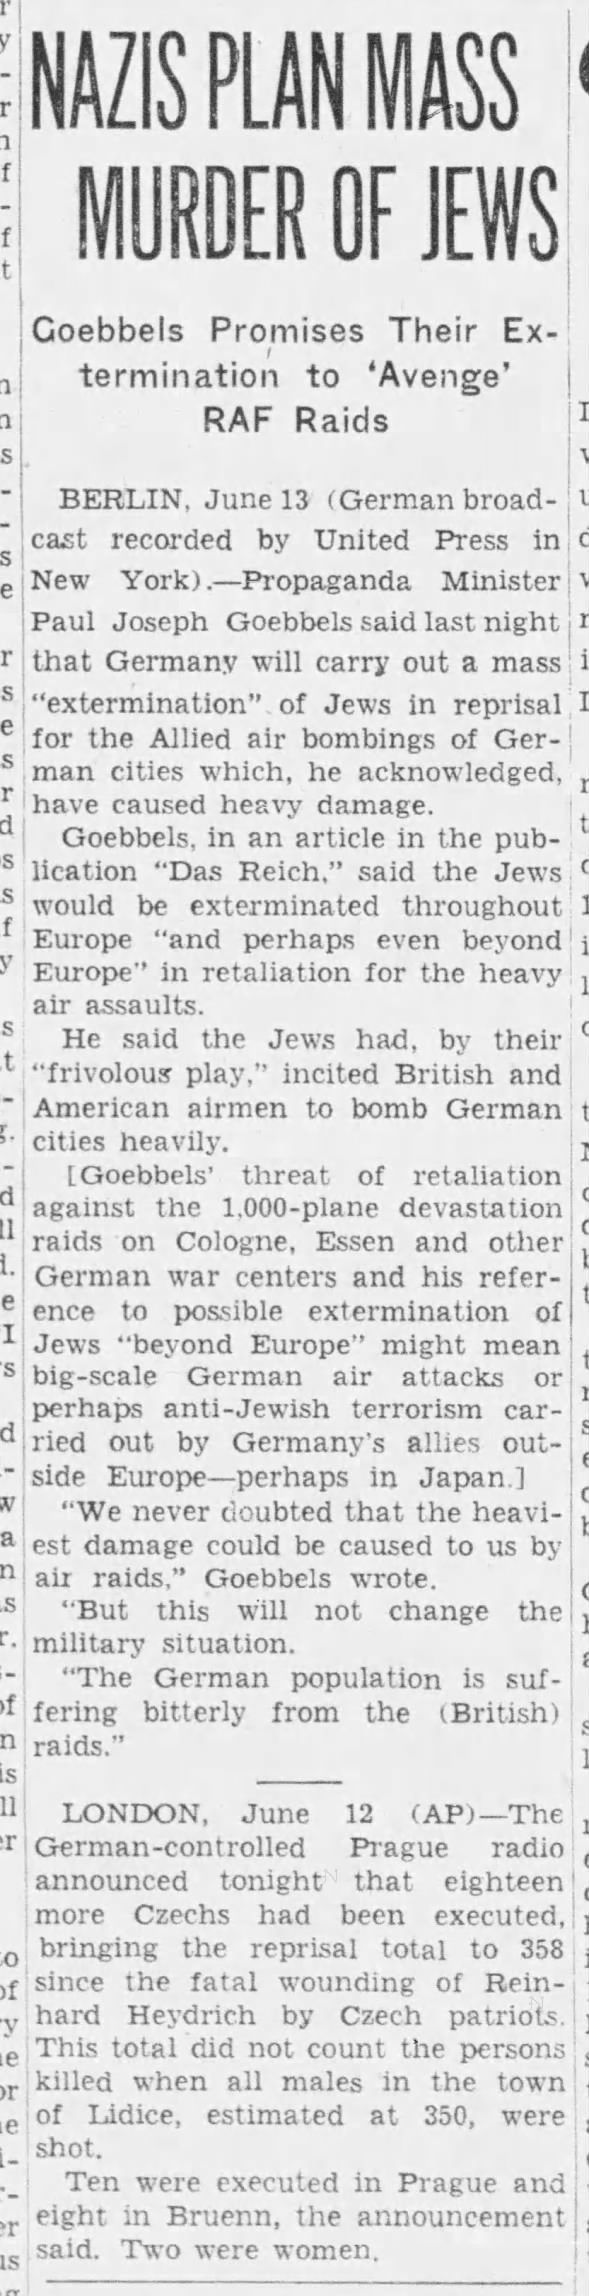 Nazis Plan Mass Murder of Jews